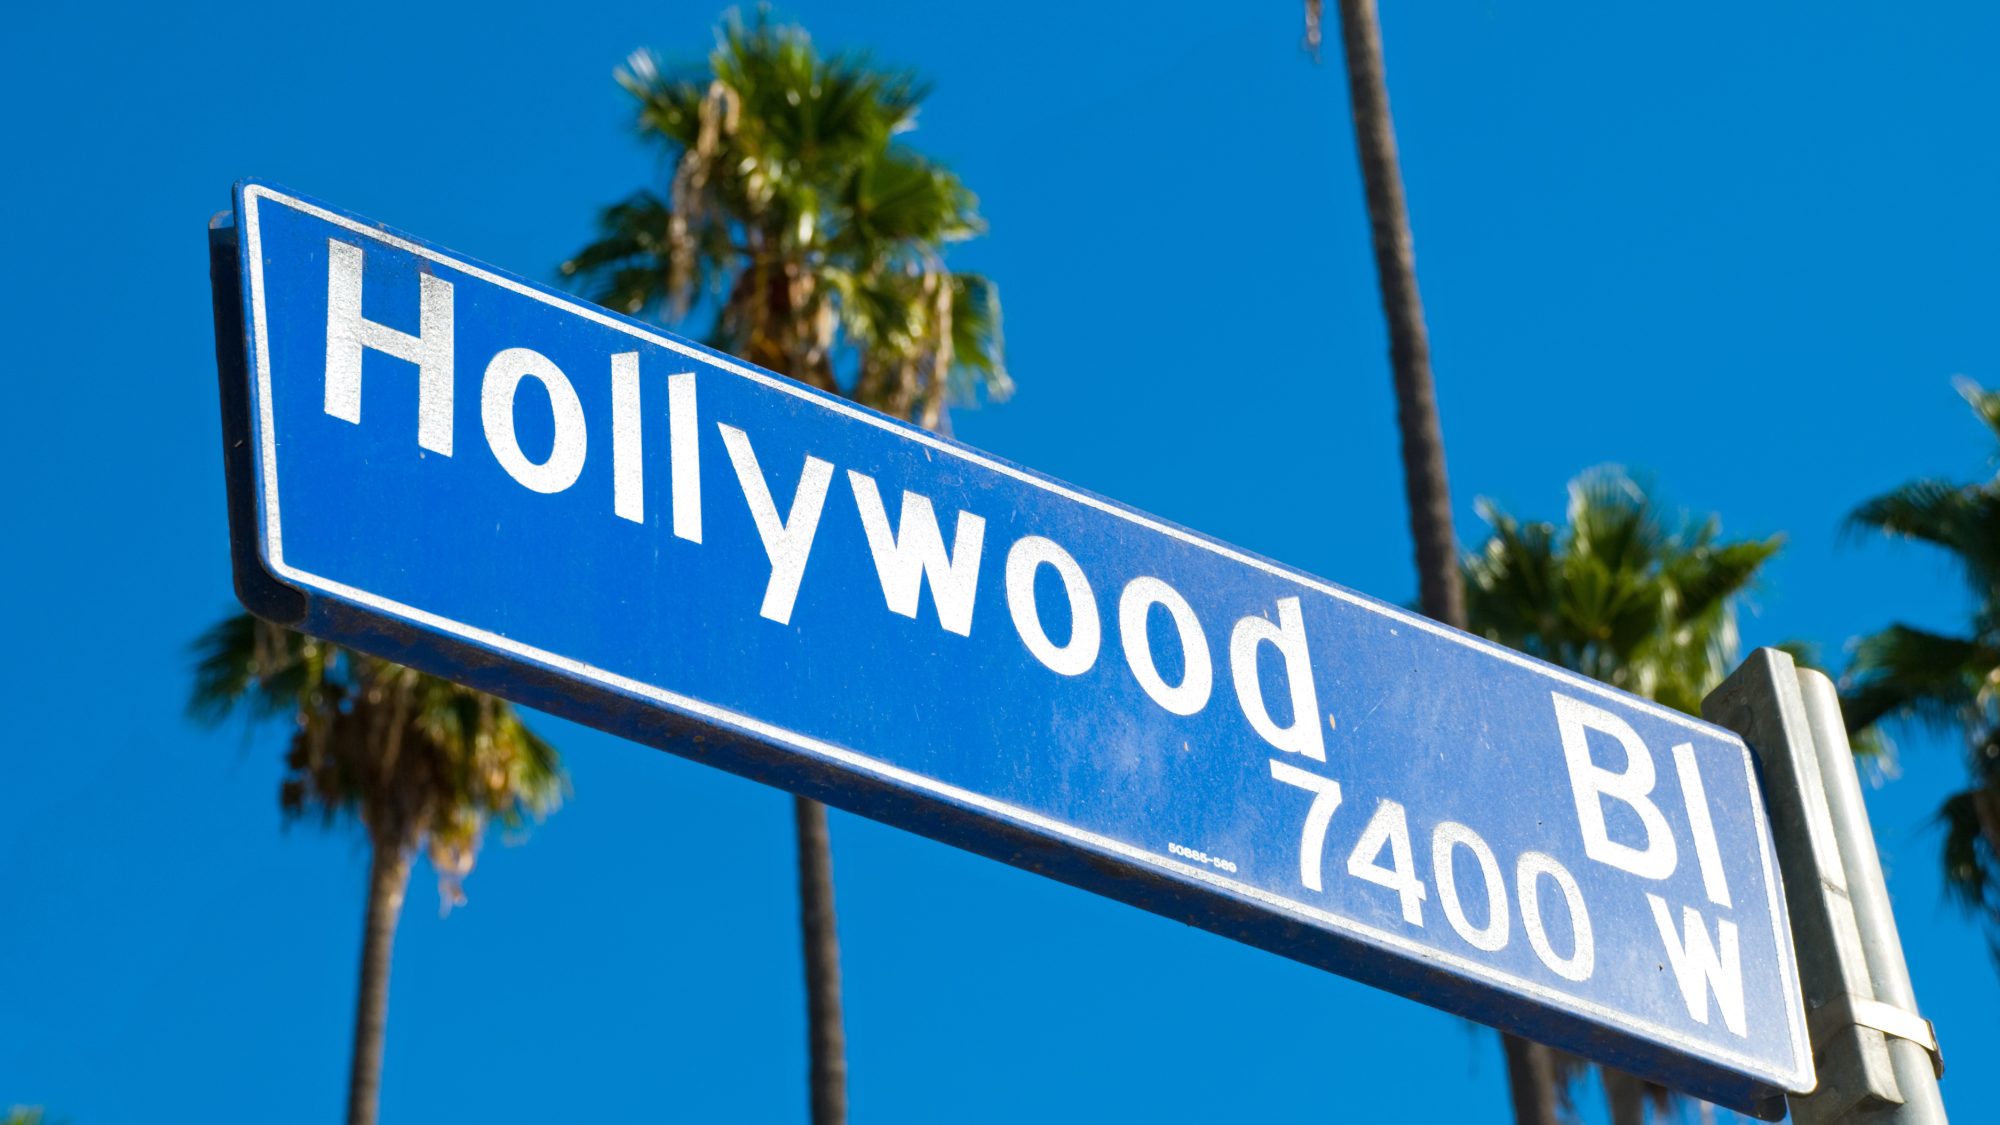 Hollywood street sign